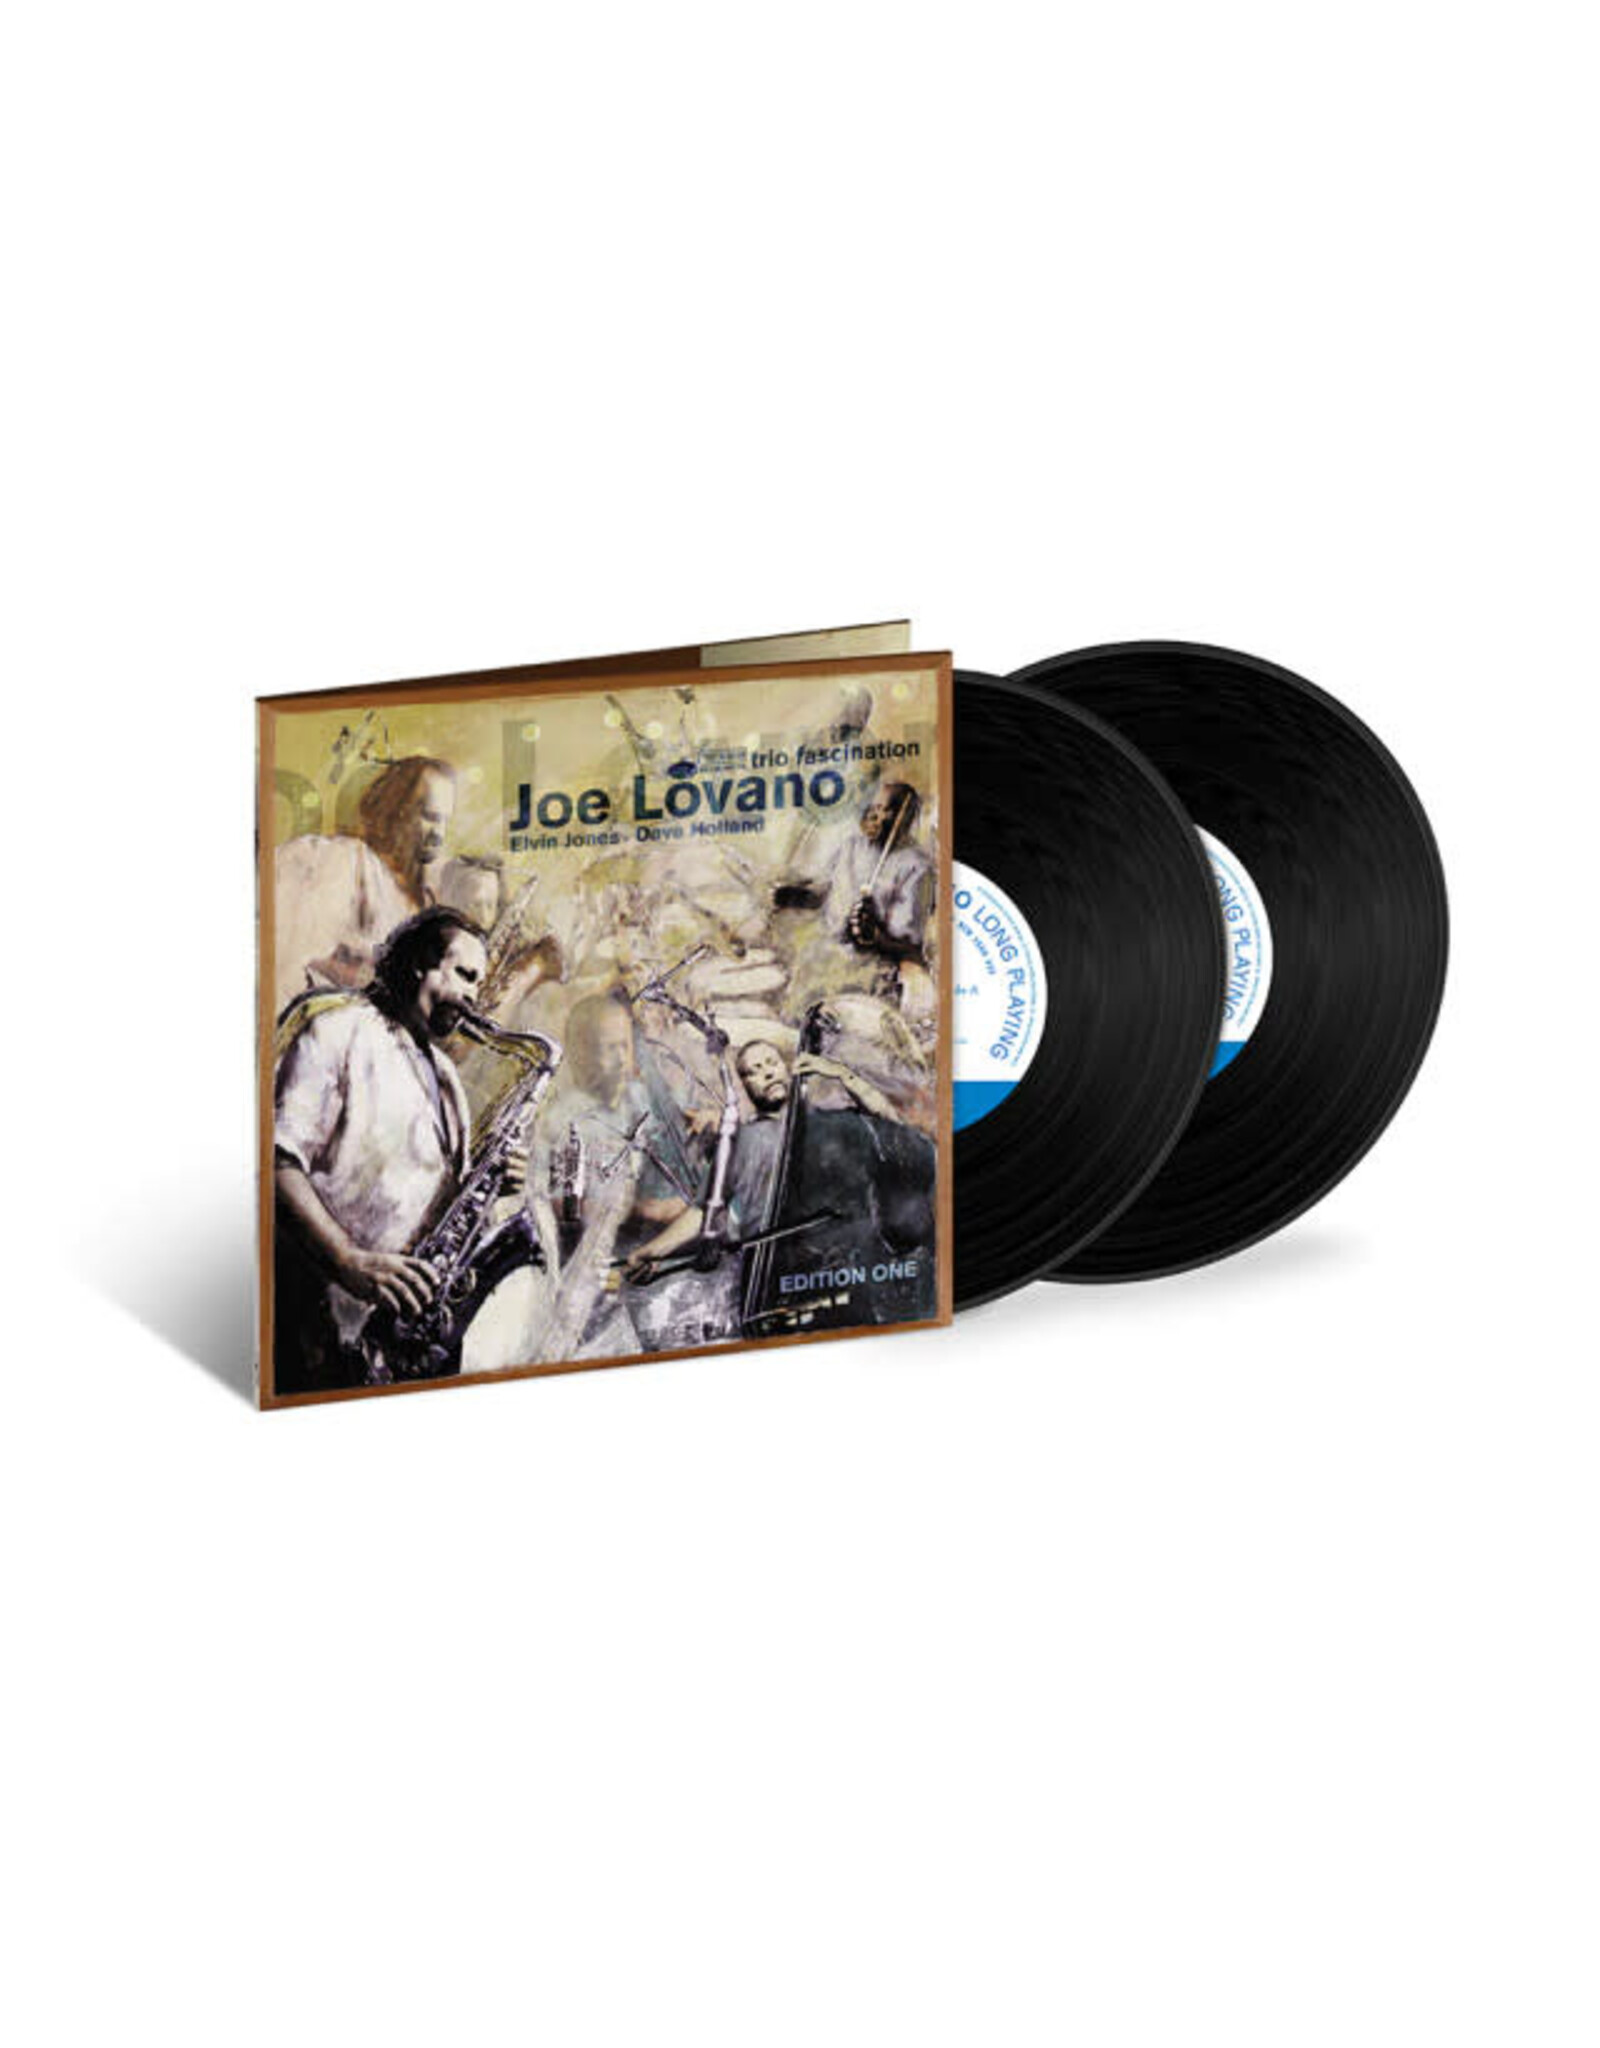 Blue Note Lovano, Joe: Trio Fascination: Edition One (Blue Note Tone Poet) LP